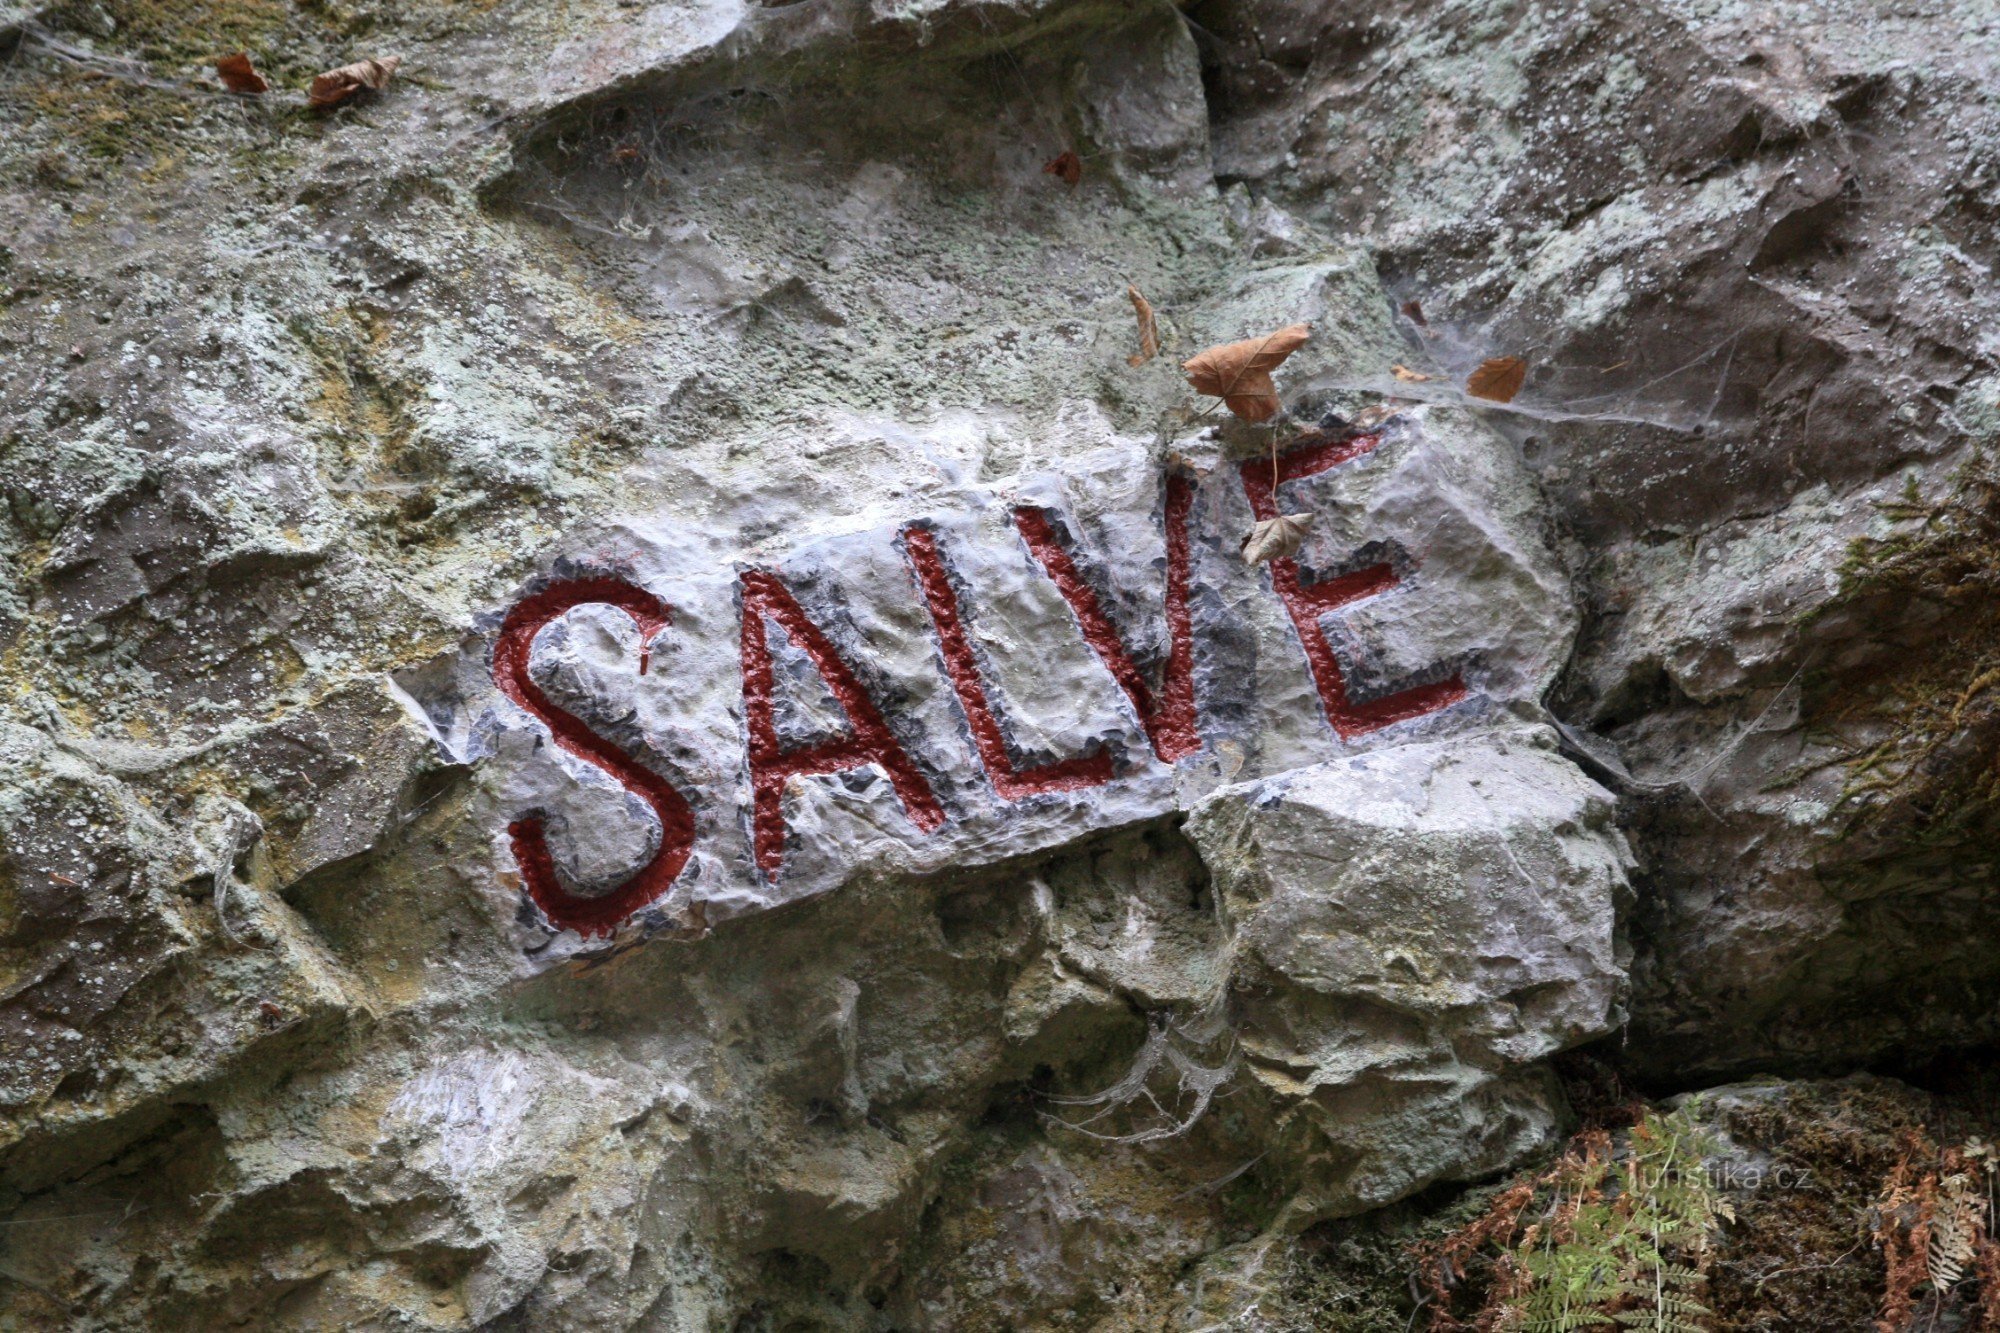 The inscription Salve on the rock